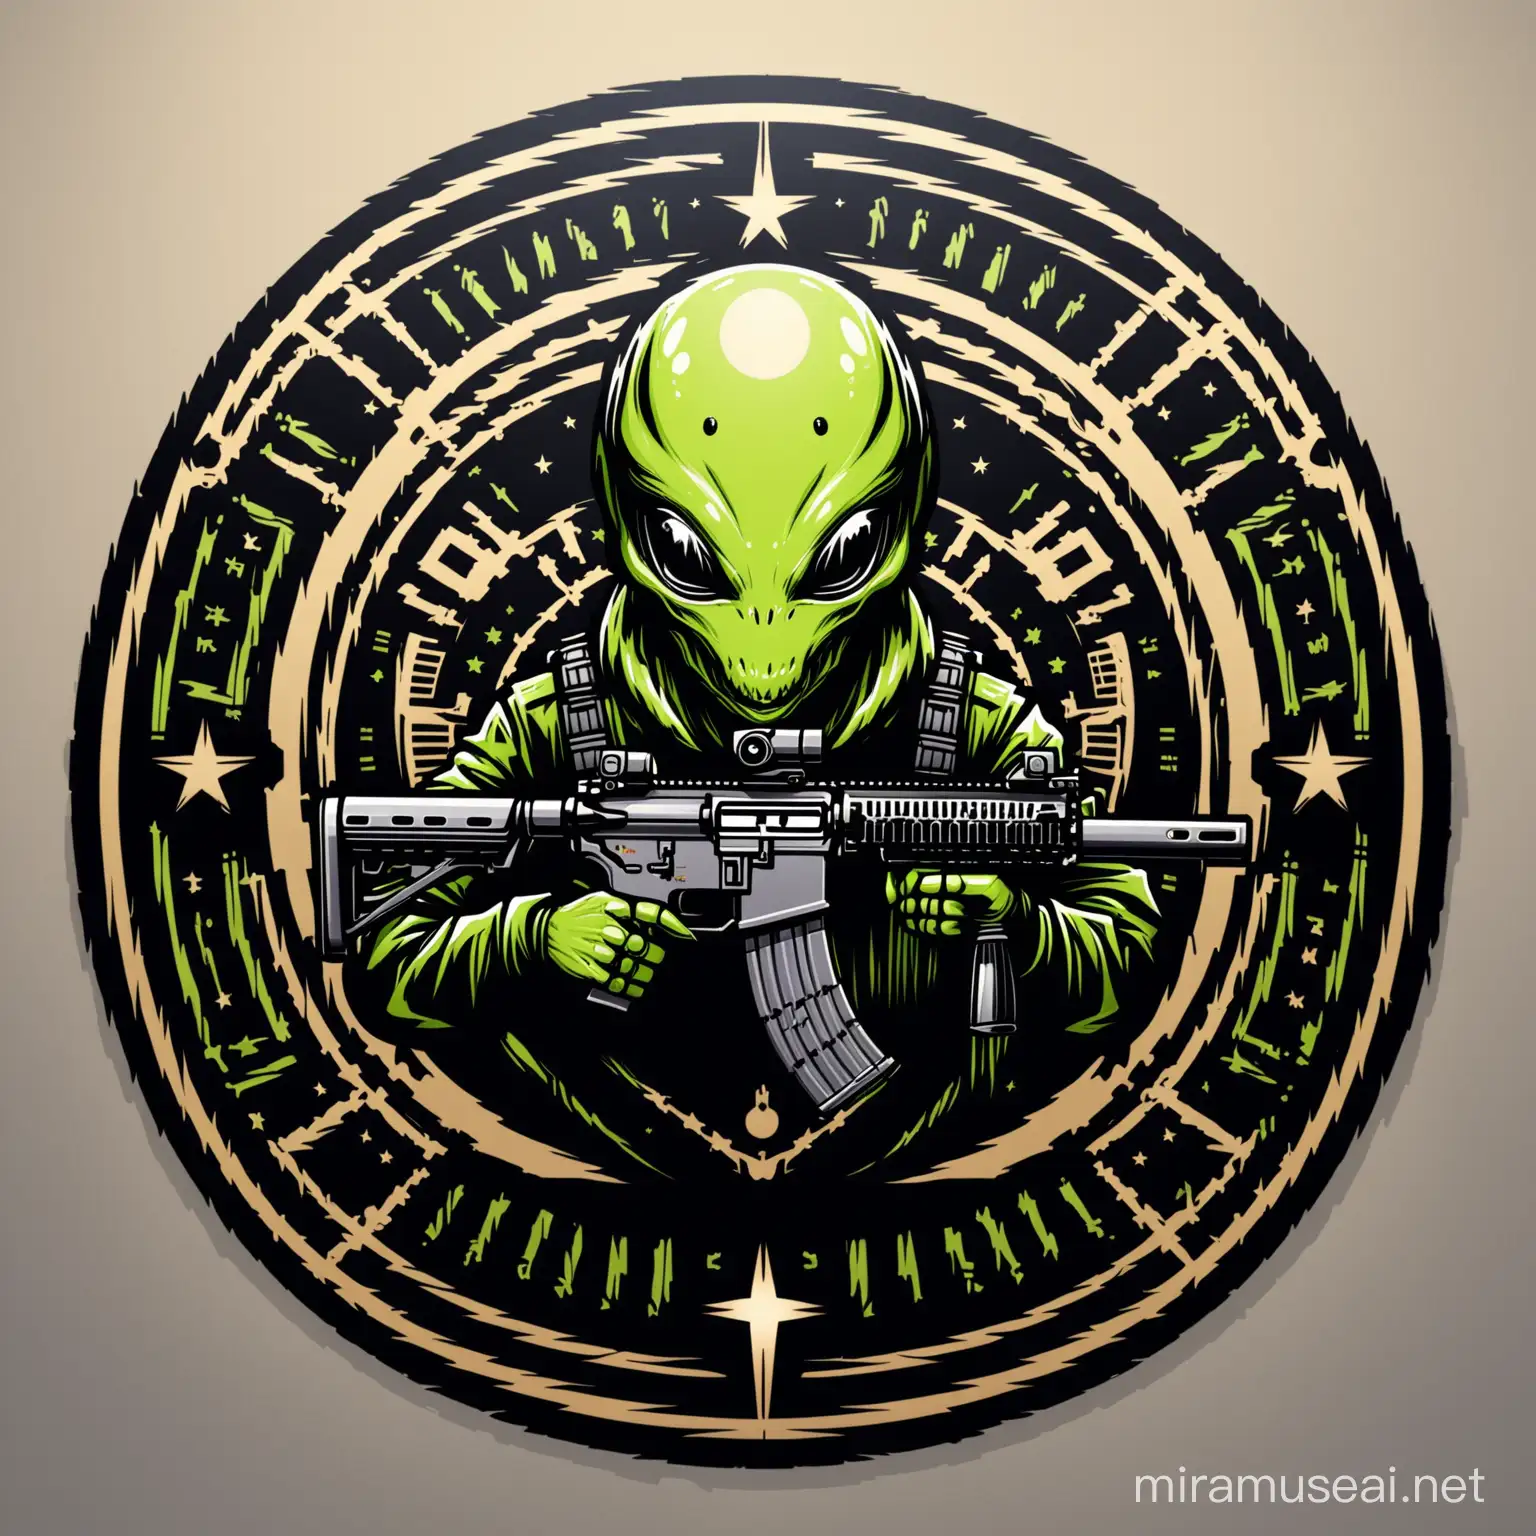 Circular Emblem of an Alien Armed with an AR15